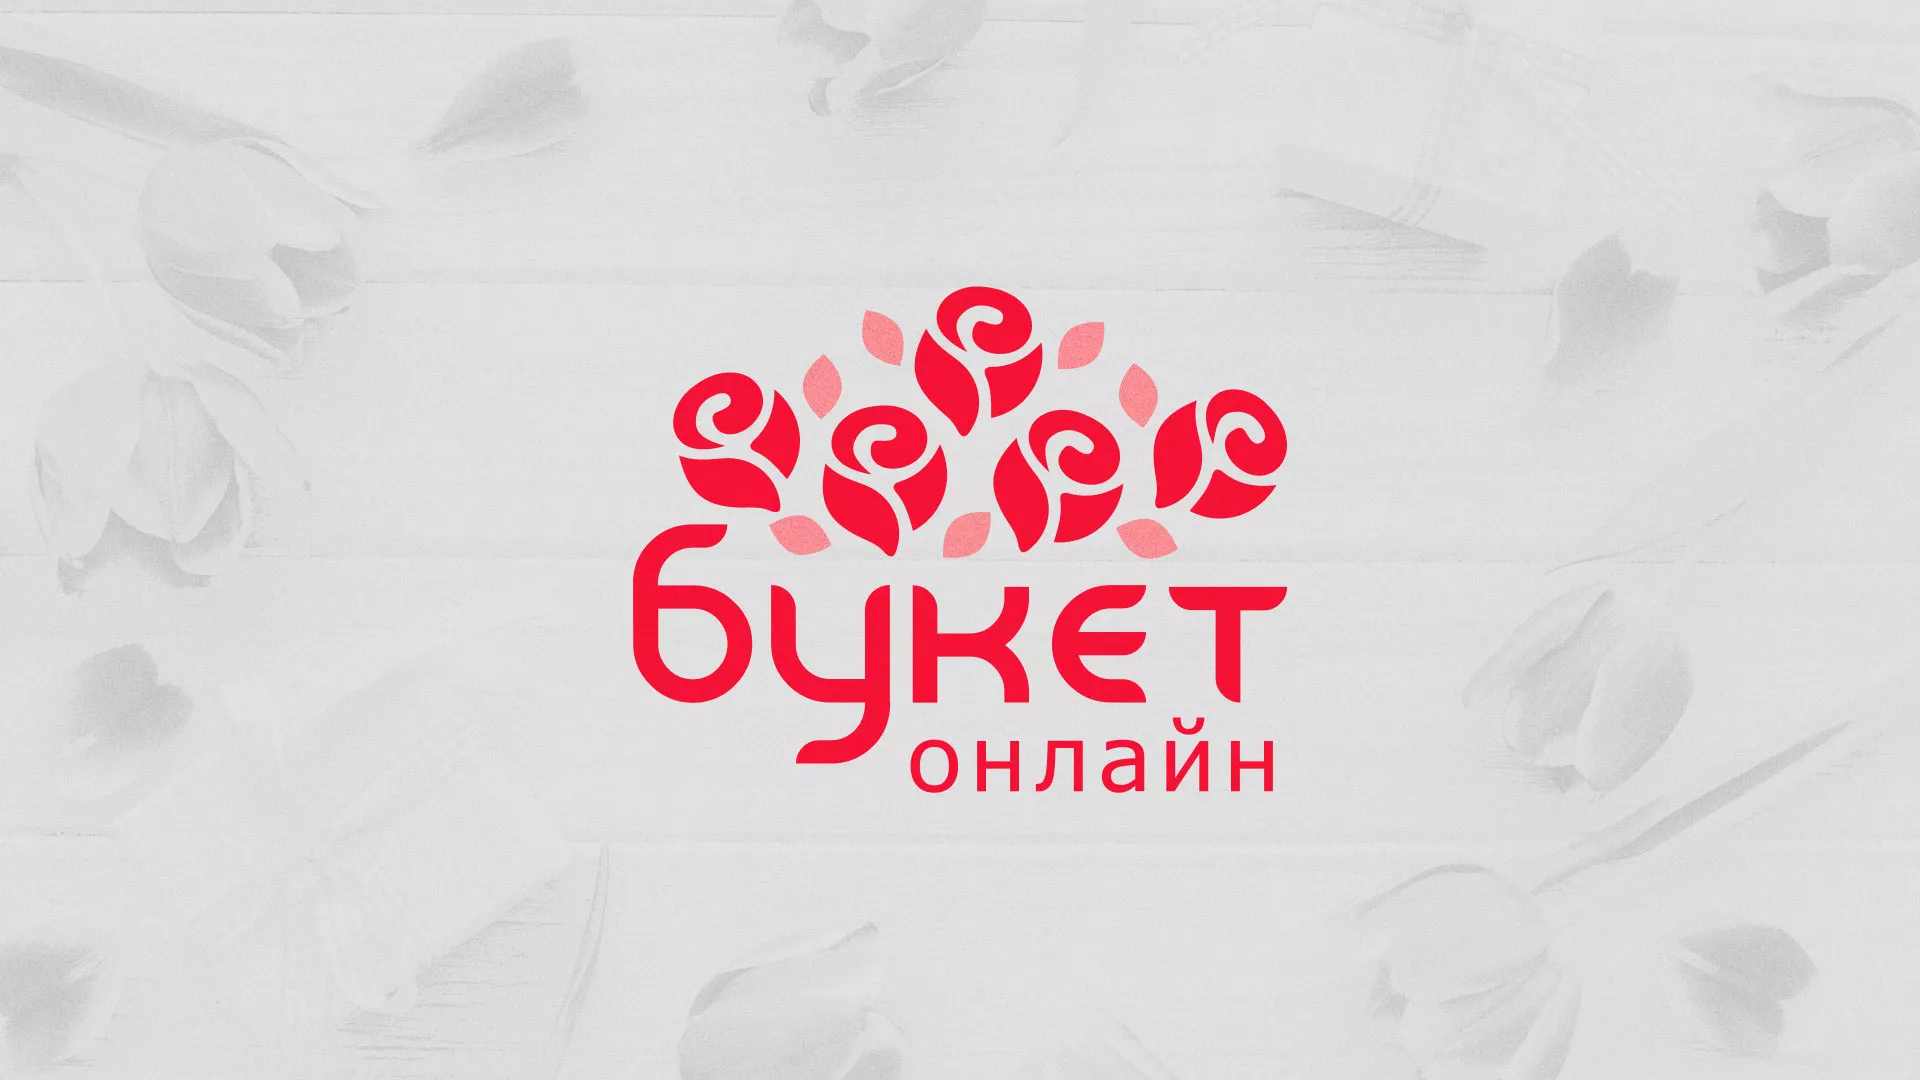 Создание интернет-магазина «Букет-онлайн» по цветам в Вилючинске